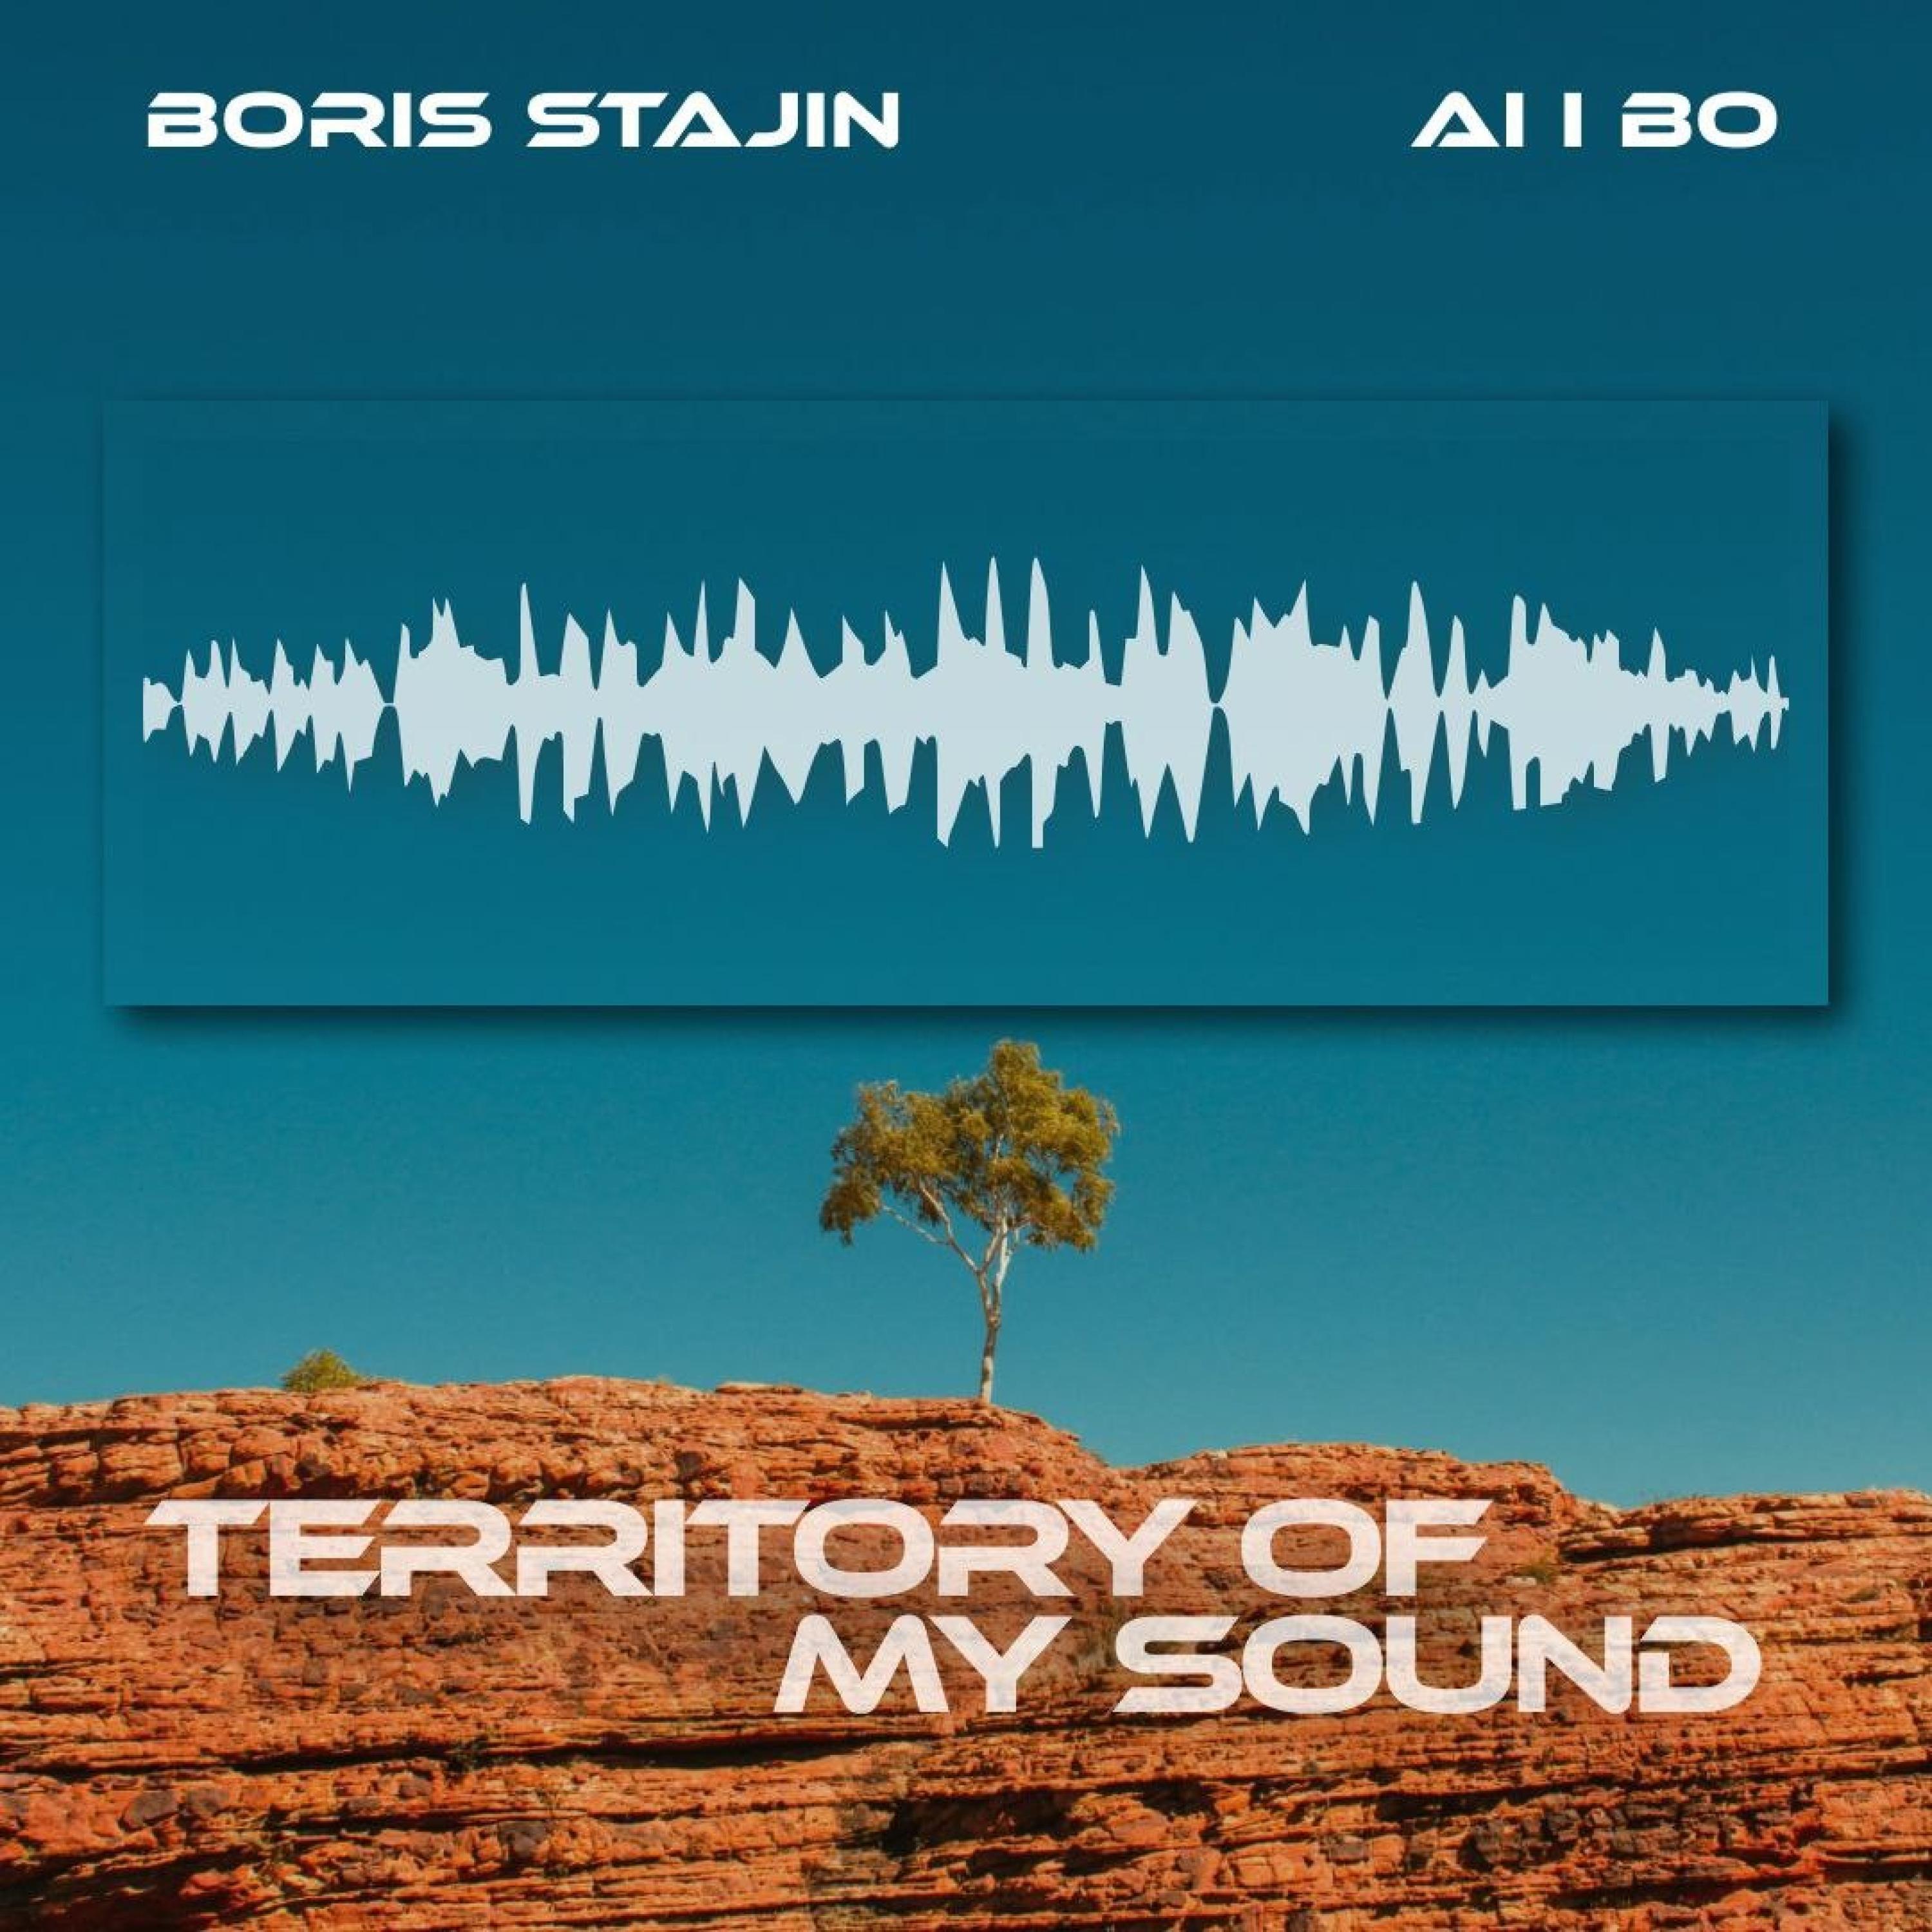 Boris StajiN - Territory of my sound (feat. Al l bo)